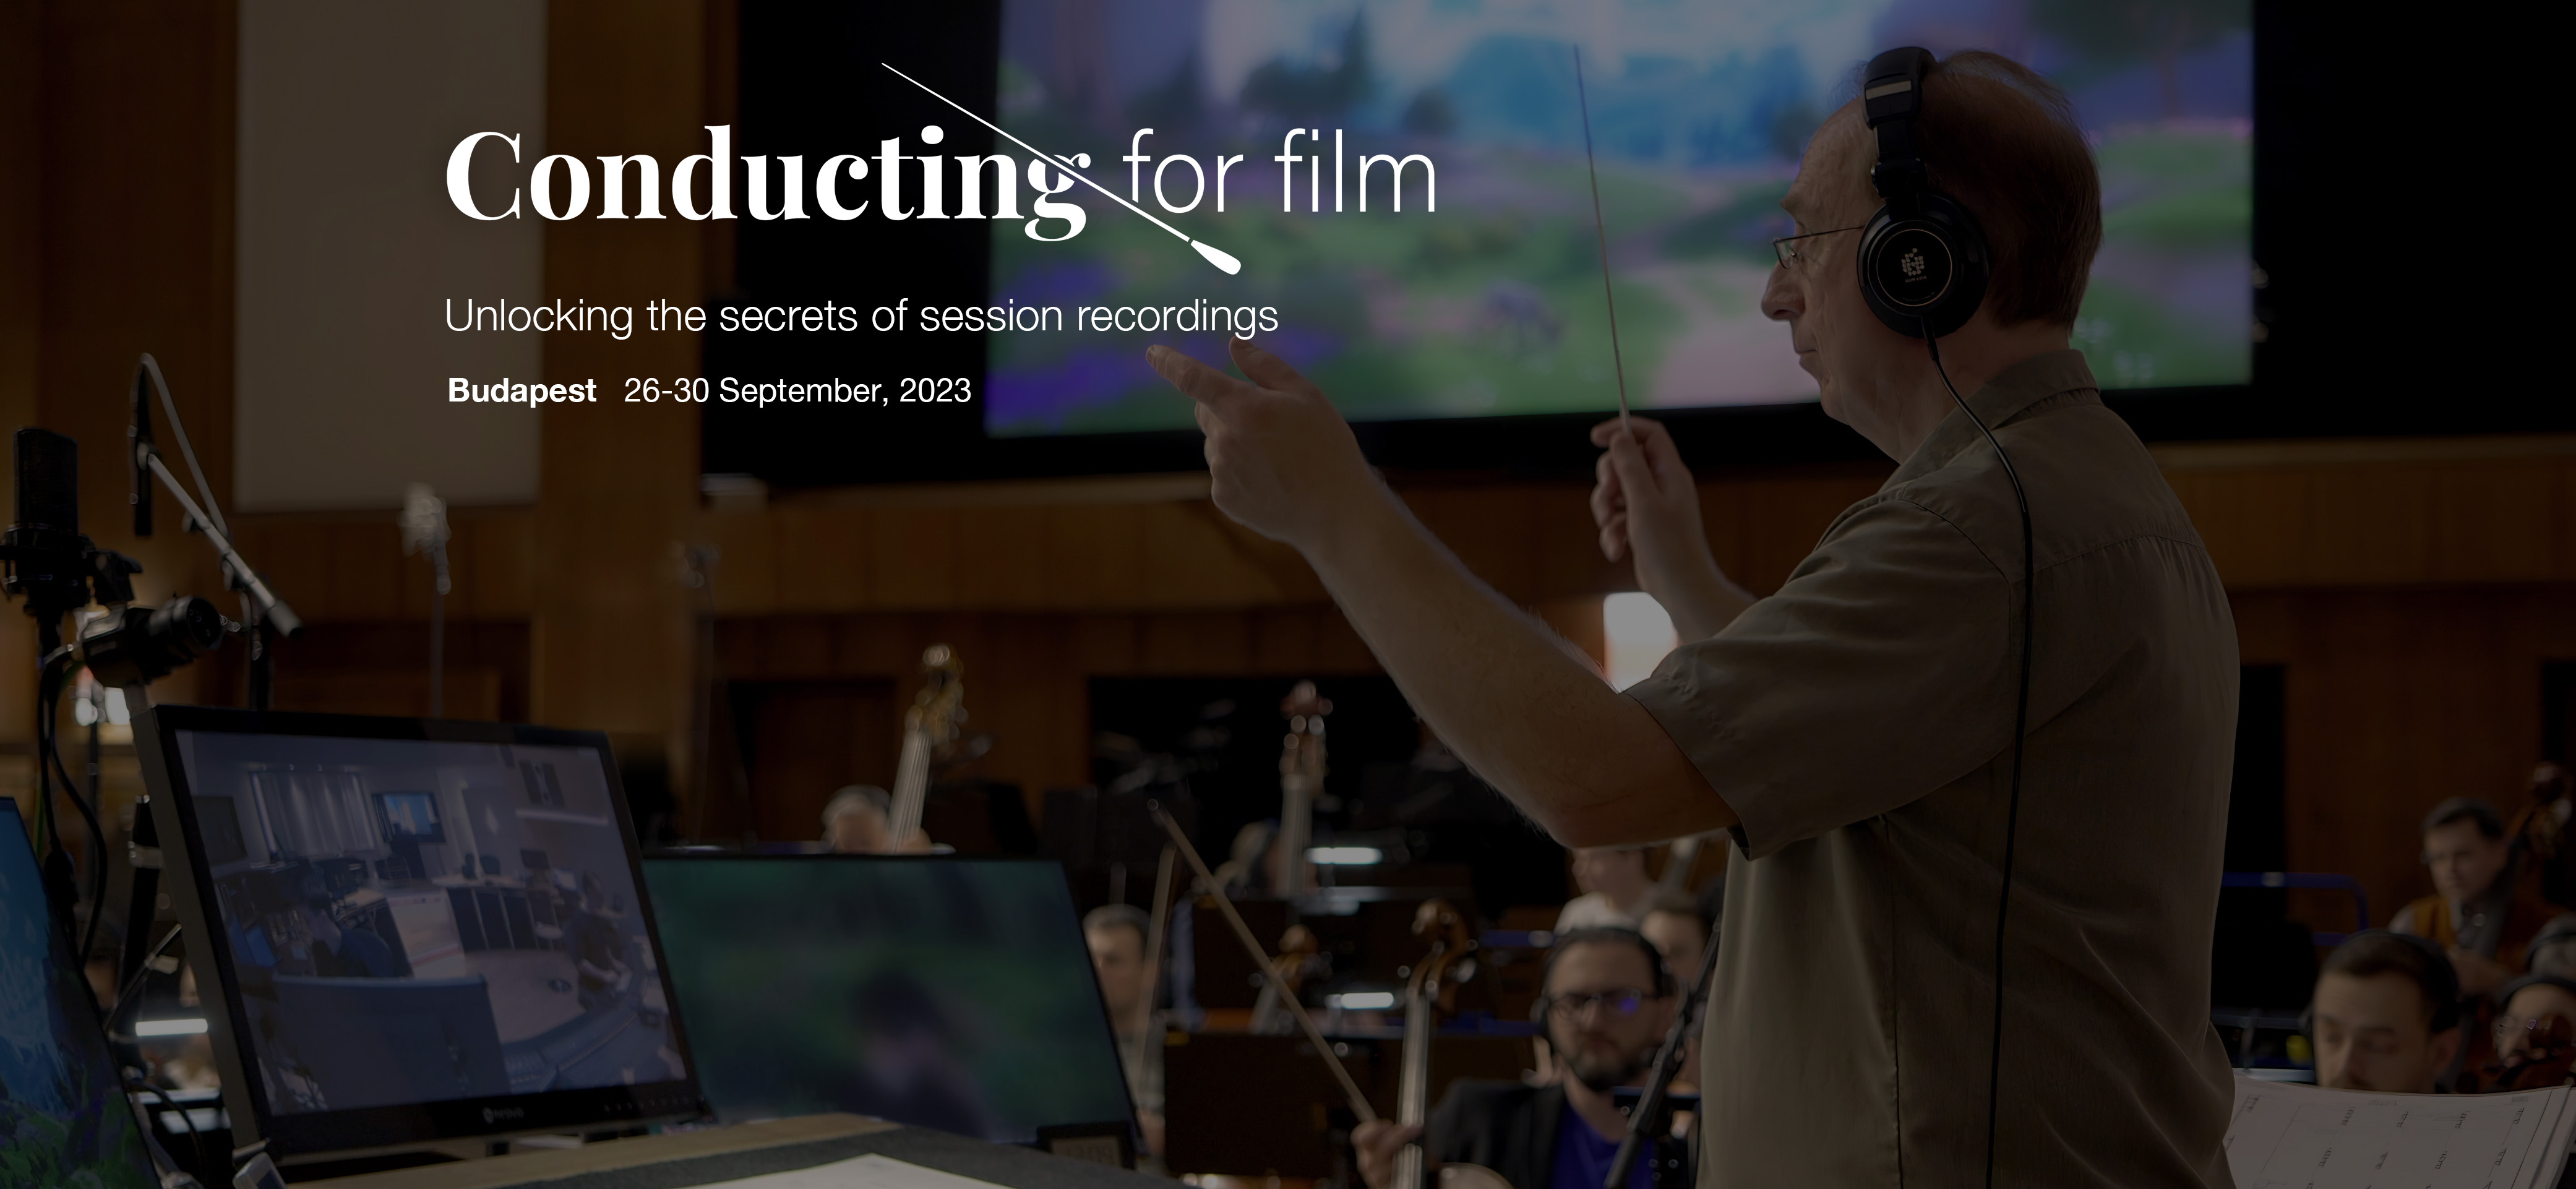 Conducting For Film banner.jpg